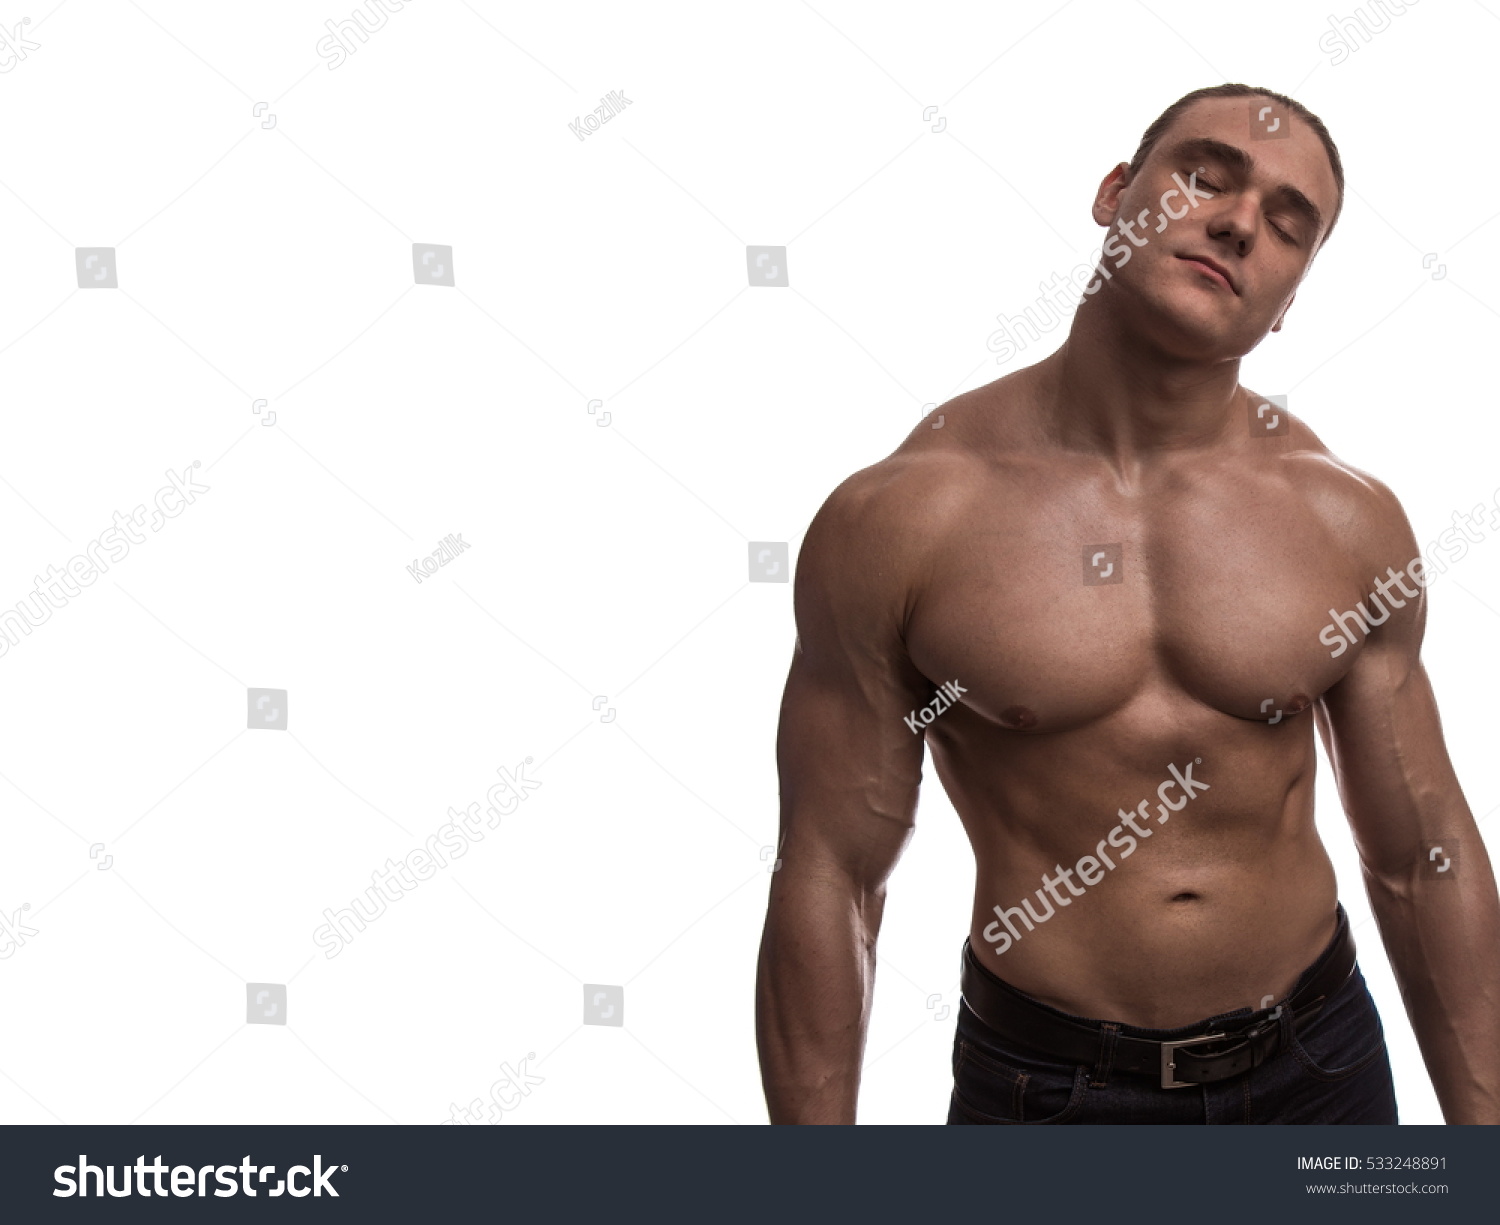 Стоковая фотография 533248891 Naked Torso Male Bodybuilder Athlete